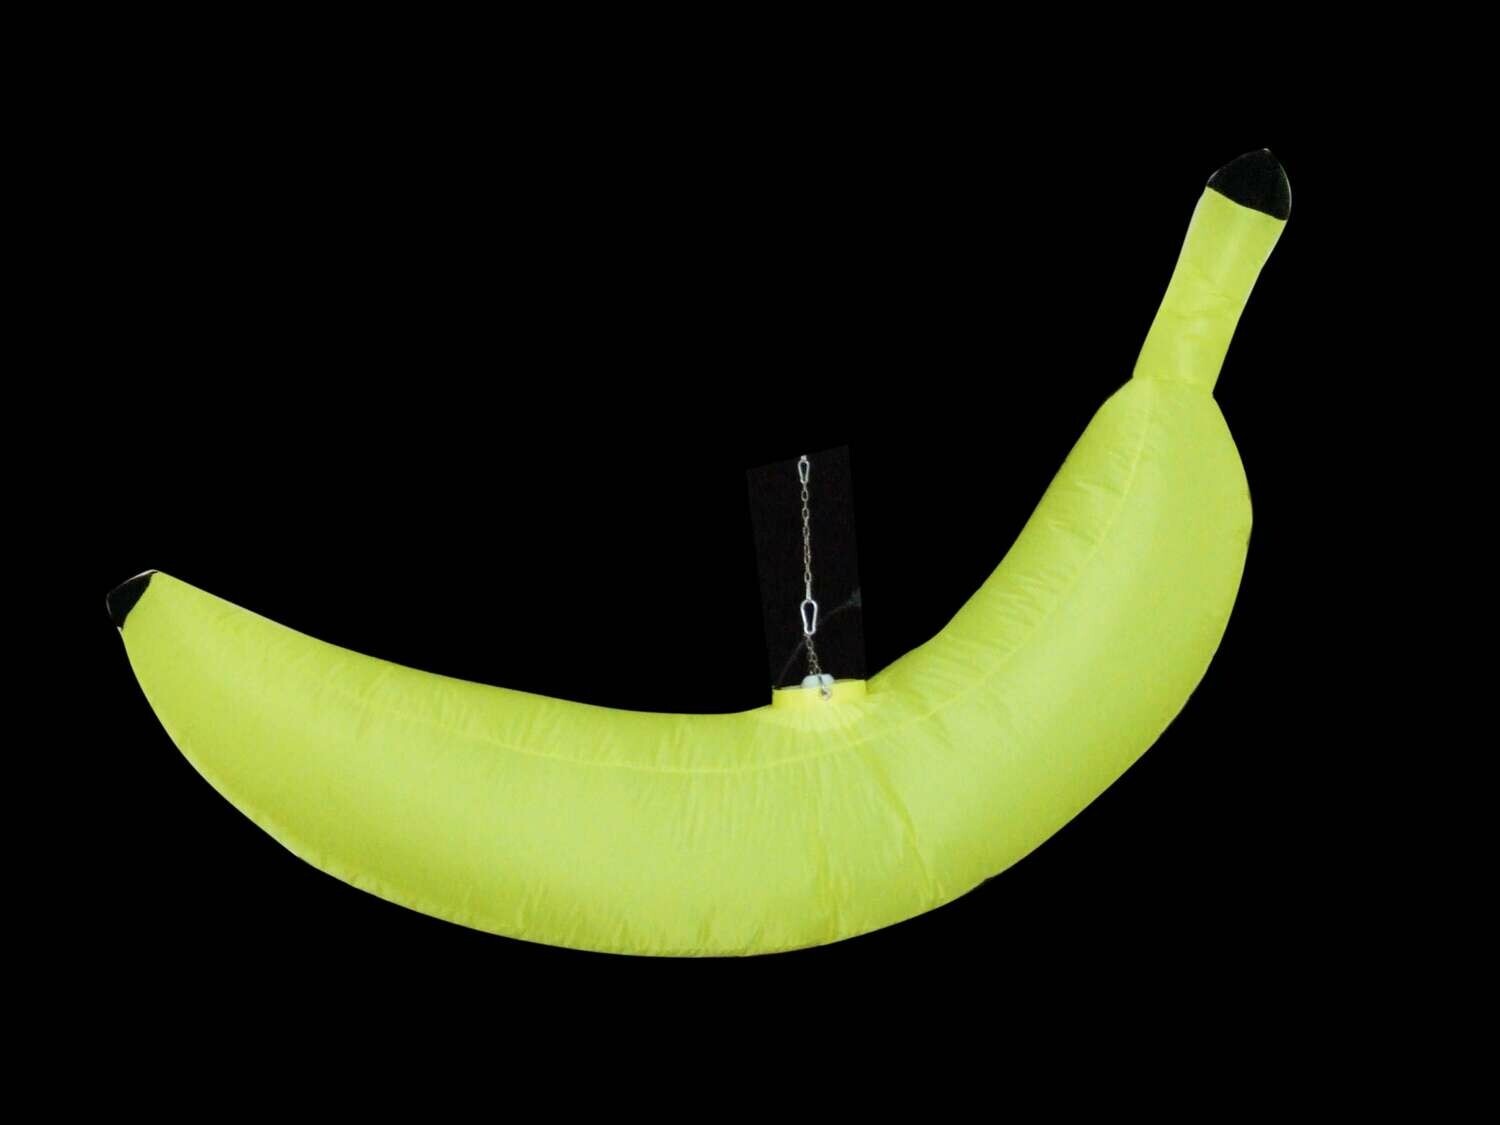 Hanging Inflatable 3D Banana 6ft/182cm Long